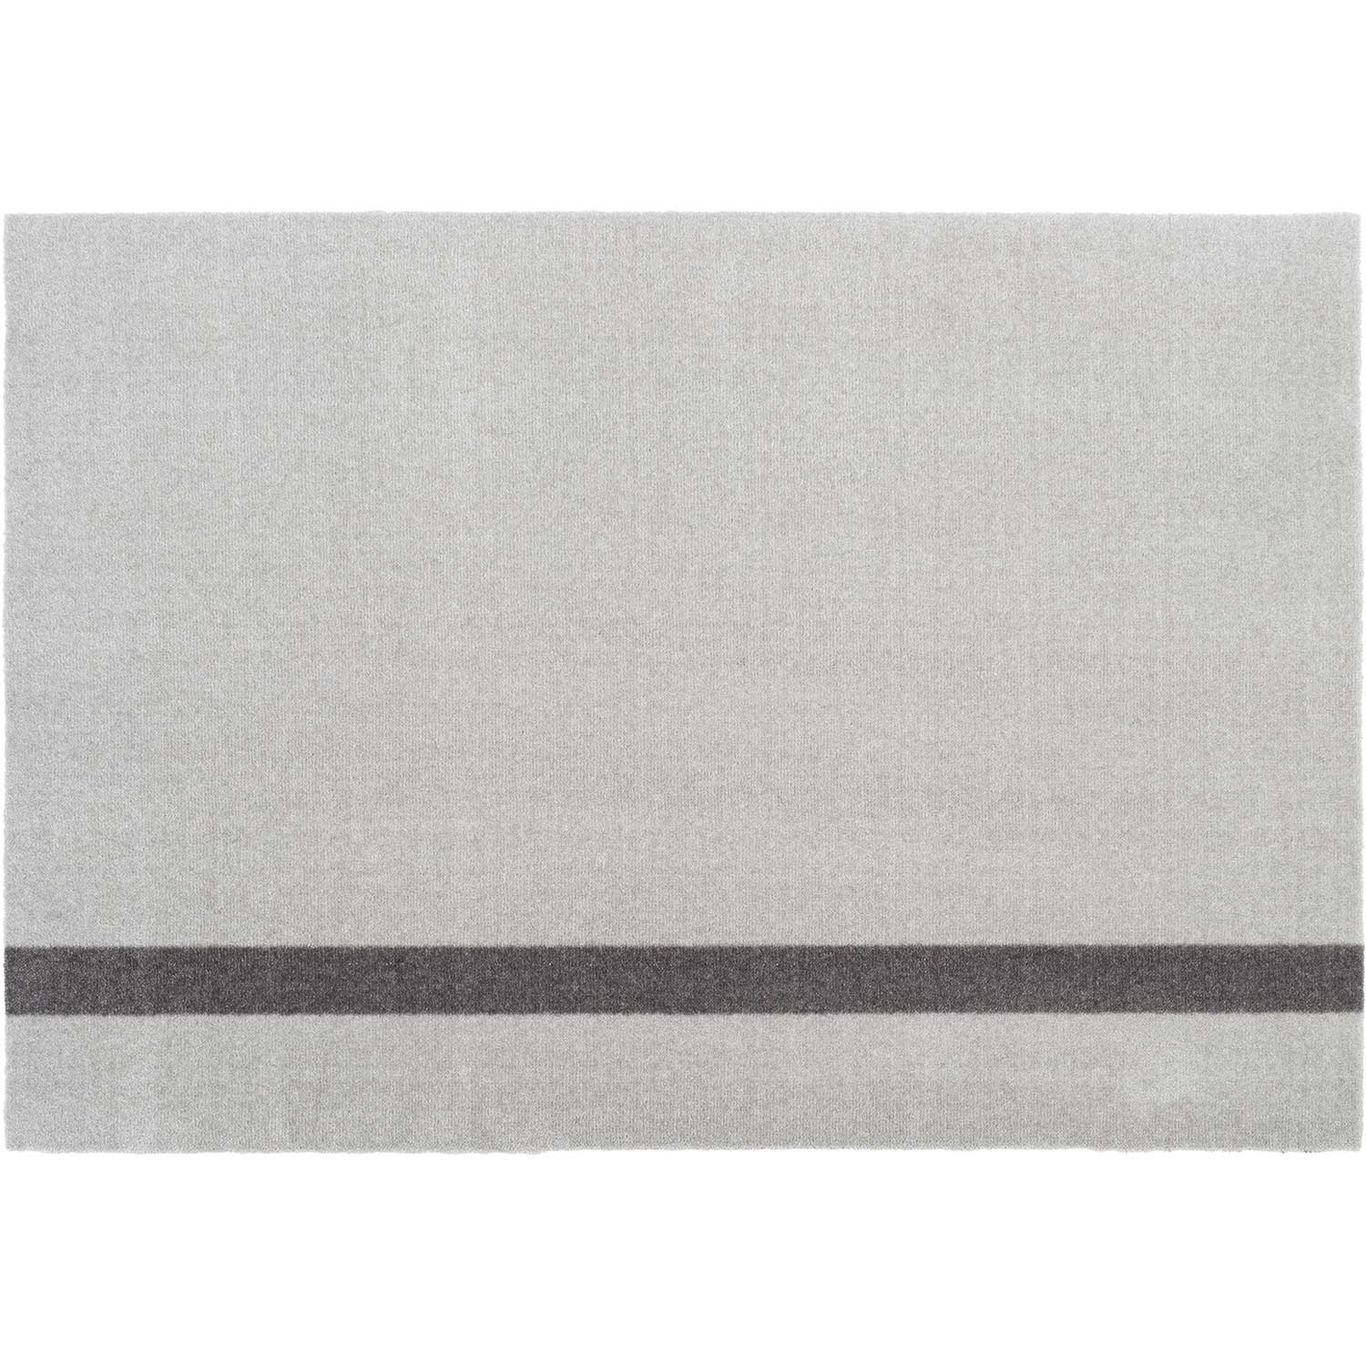 Stripes Vertikal Teppich Hellgrau / Steel Grey, 90x130 cm